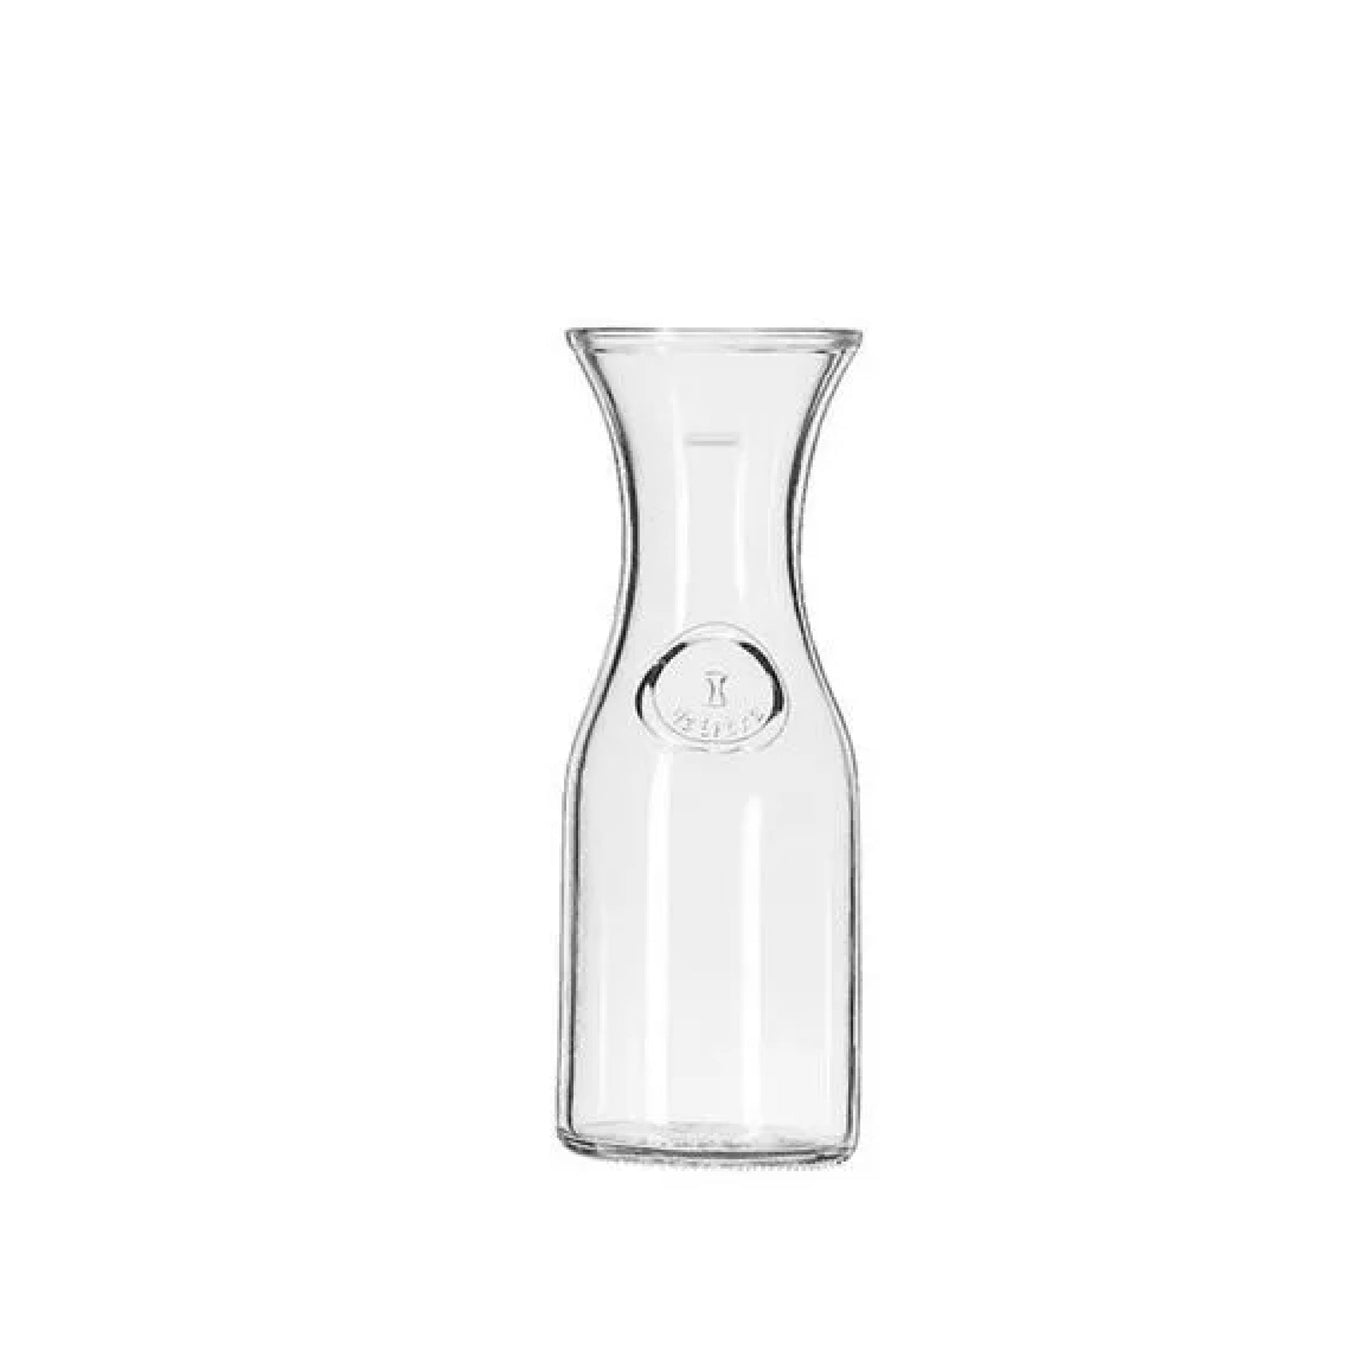 Arcoroc 71083 Excalibur 10.5 oz. Customizable Tall Wine Glass by Arc  Cardinal - 36/Case